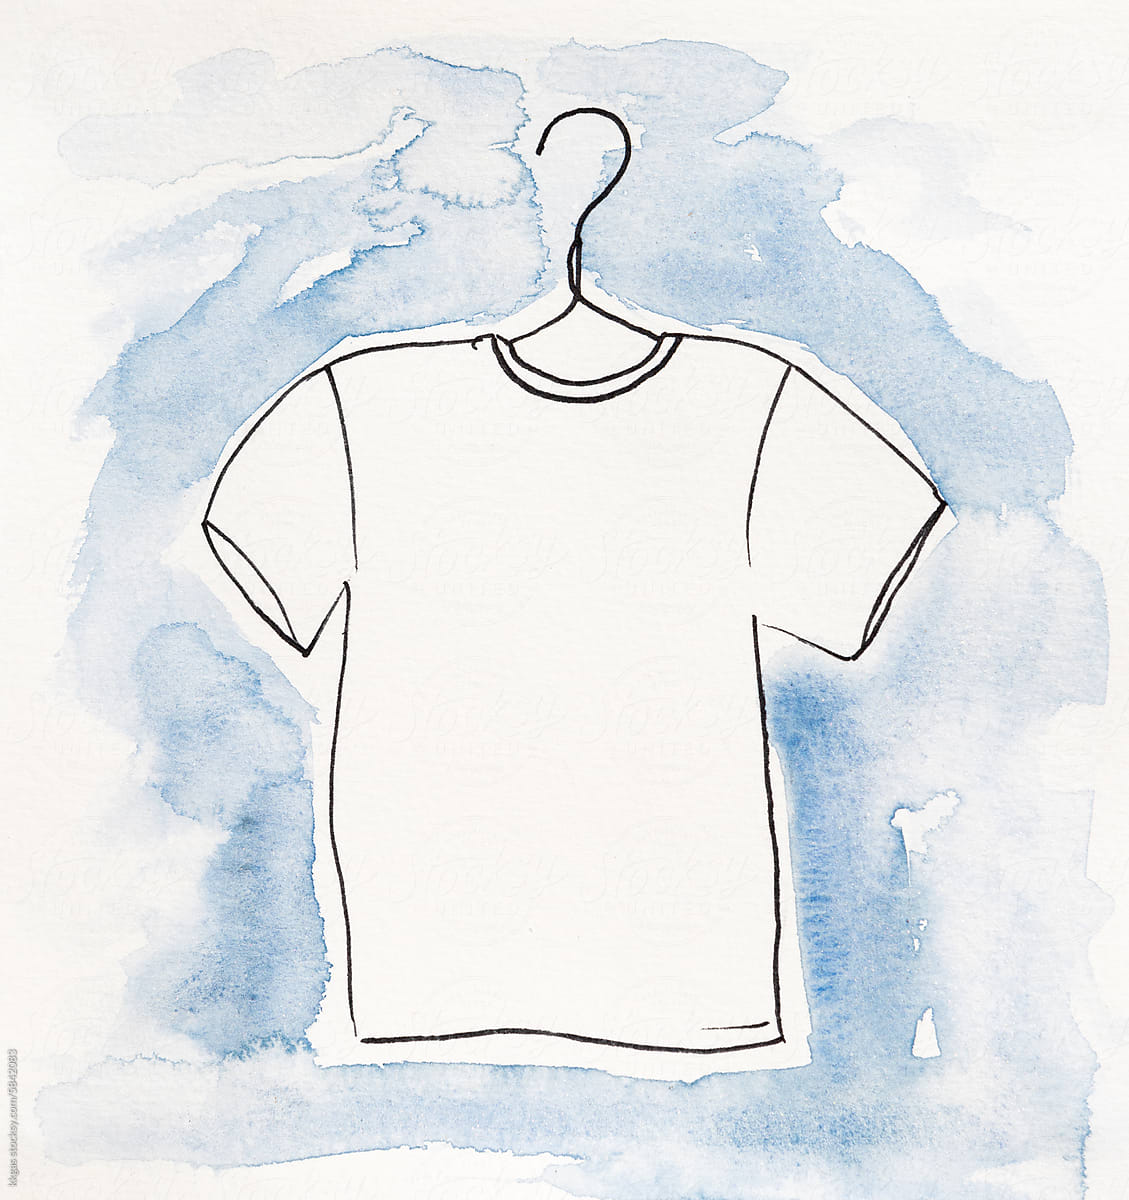 Watercolor of a plain white T-shirt